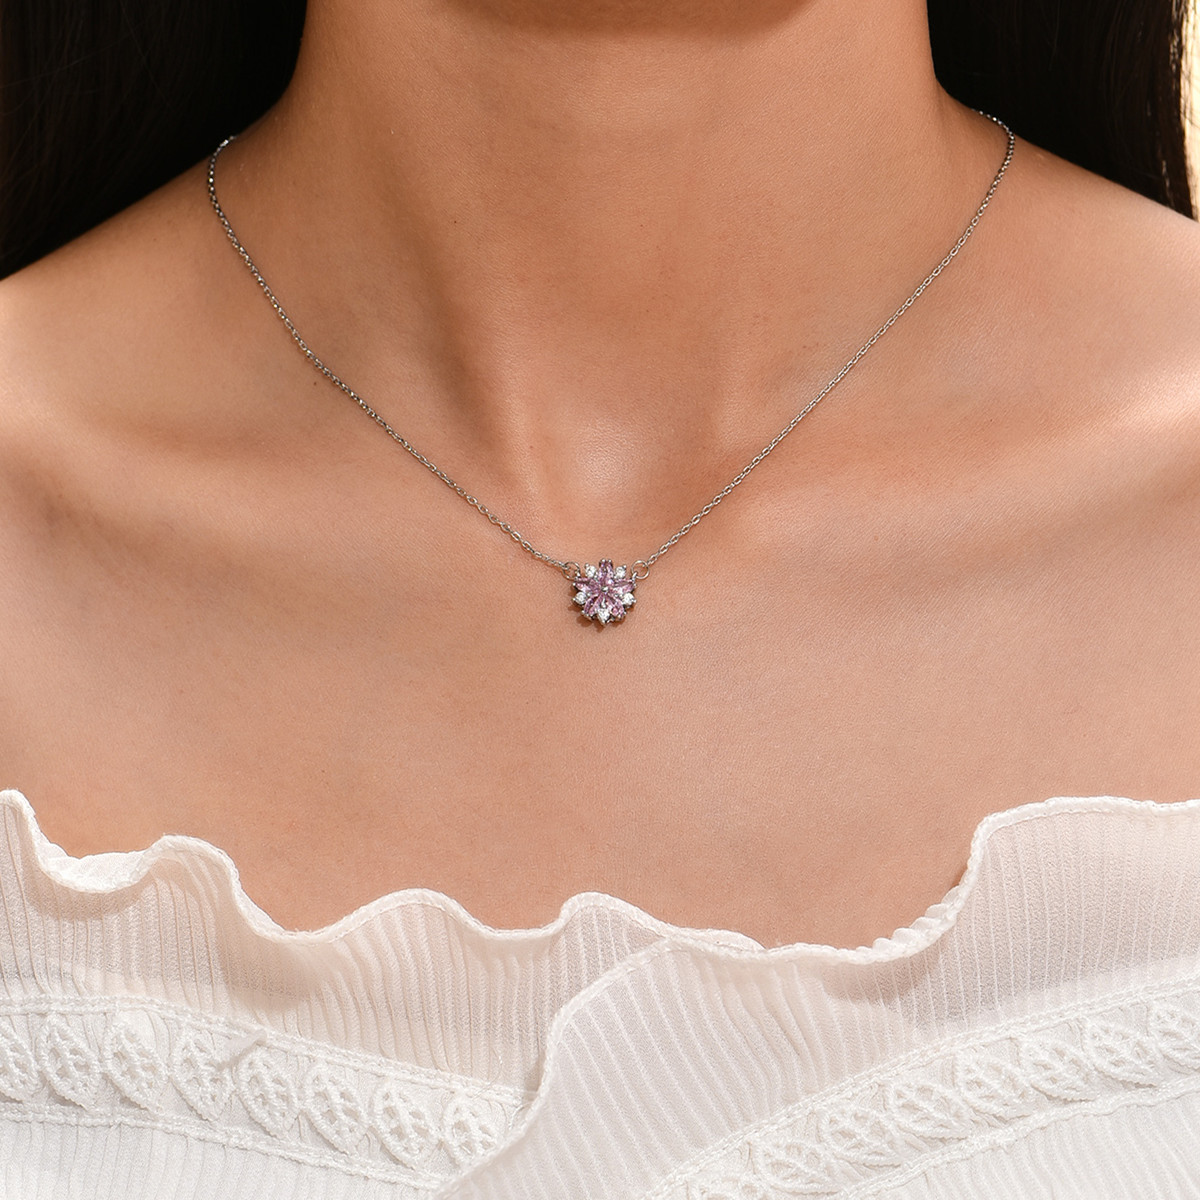 10 pcs - Flower Sakura Pink Zircon Crystal Silver Pendant Necklace|GCJ397|UK SELLER